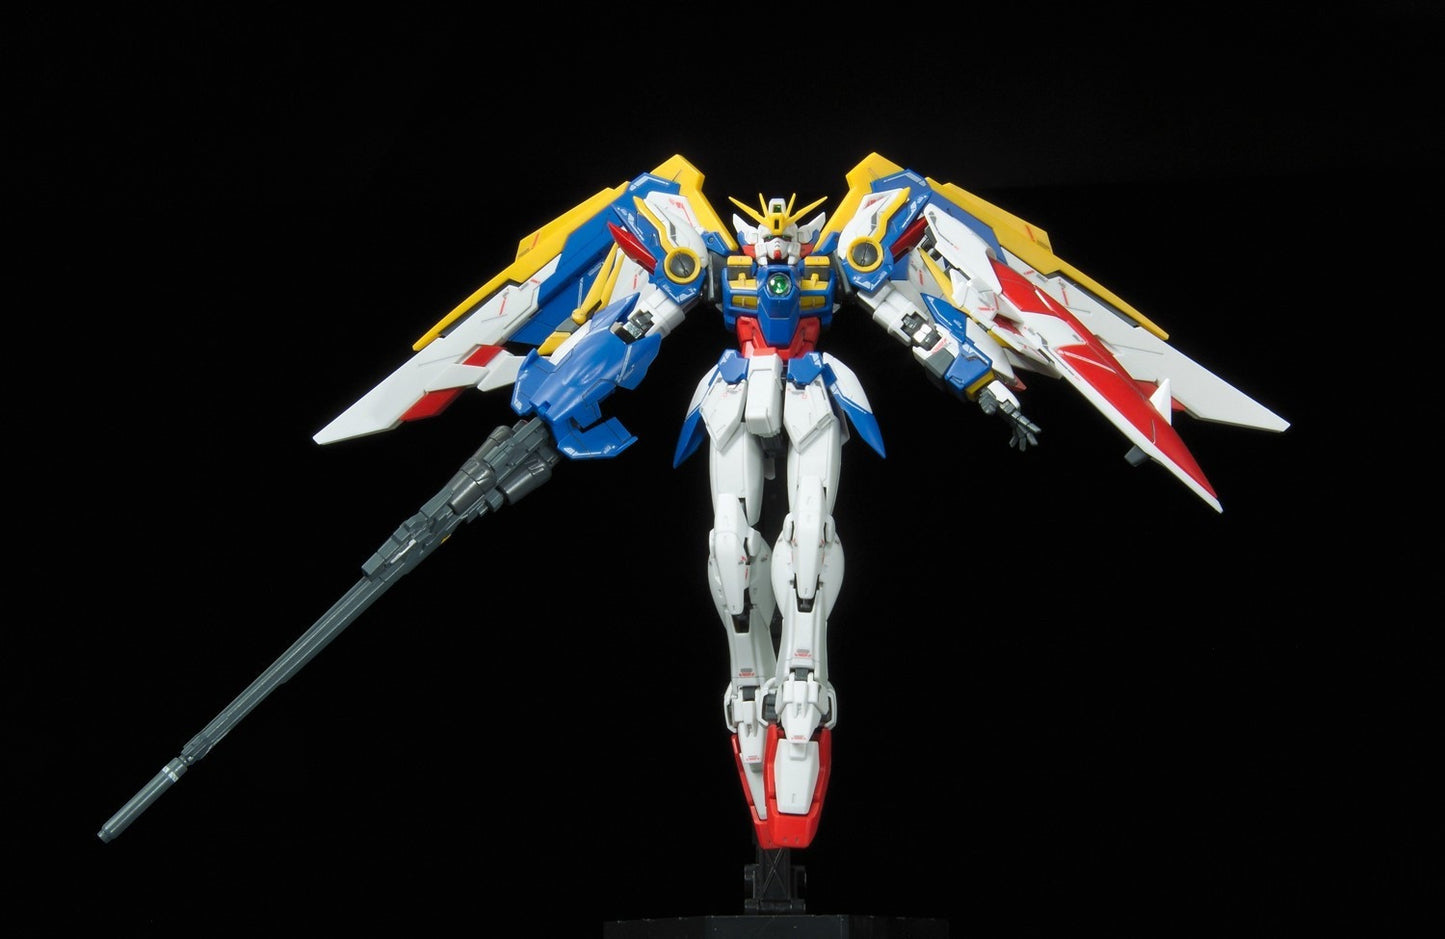 RG 1/144 #20 Wing Gundam EW